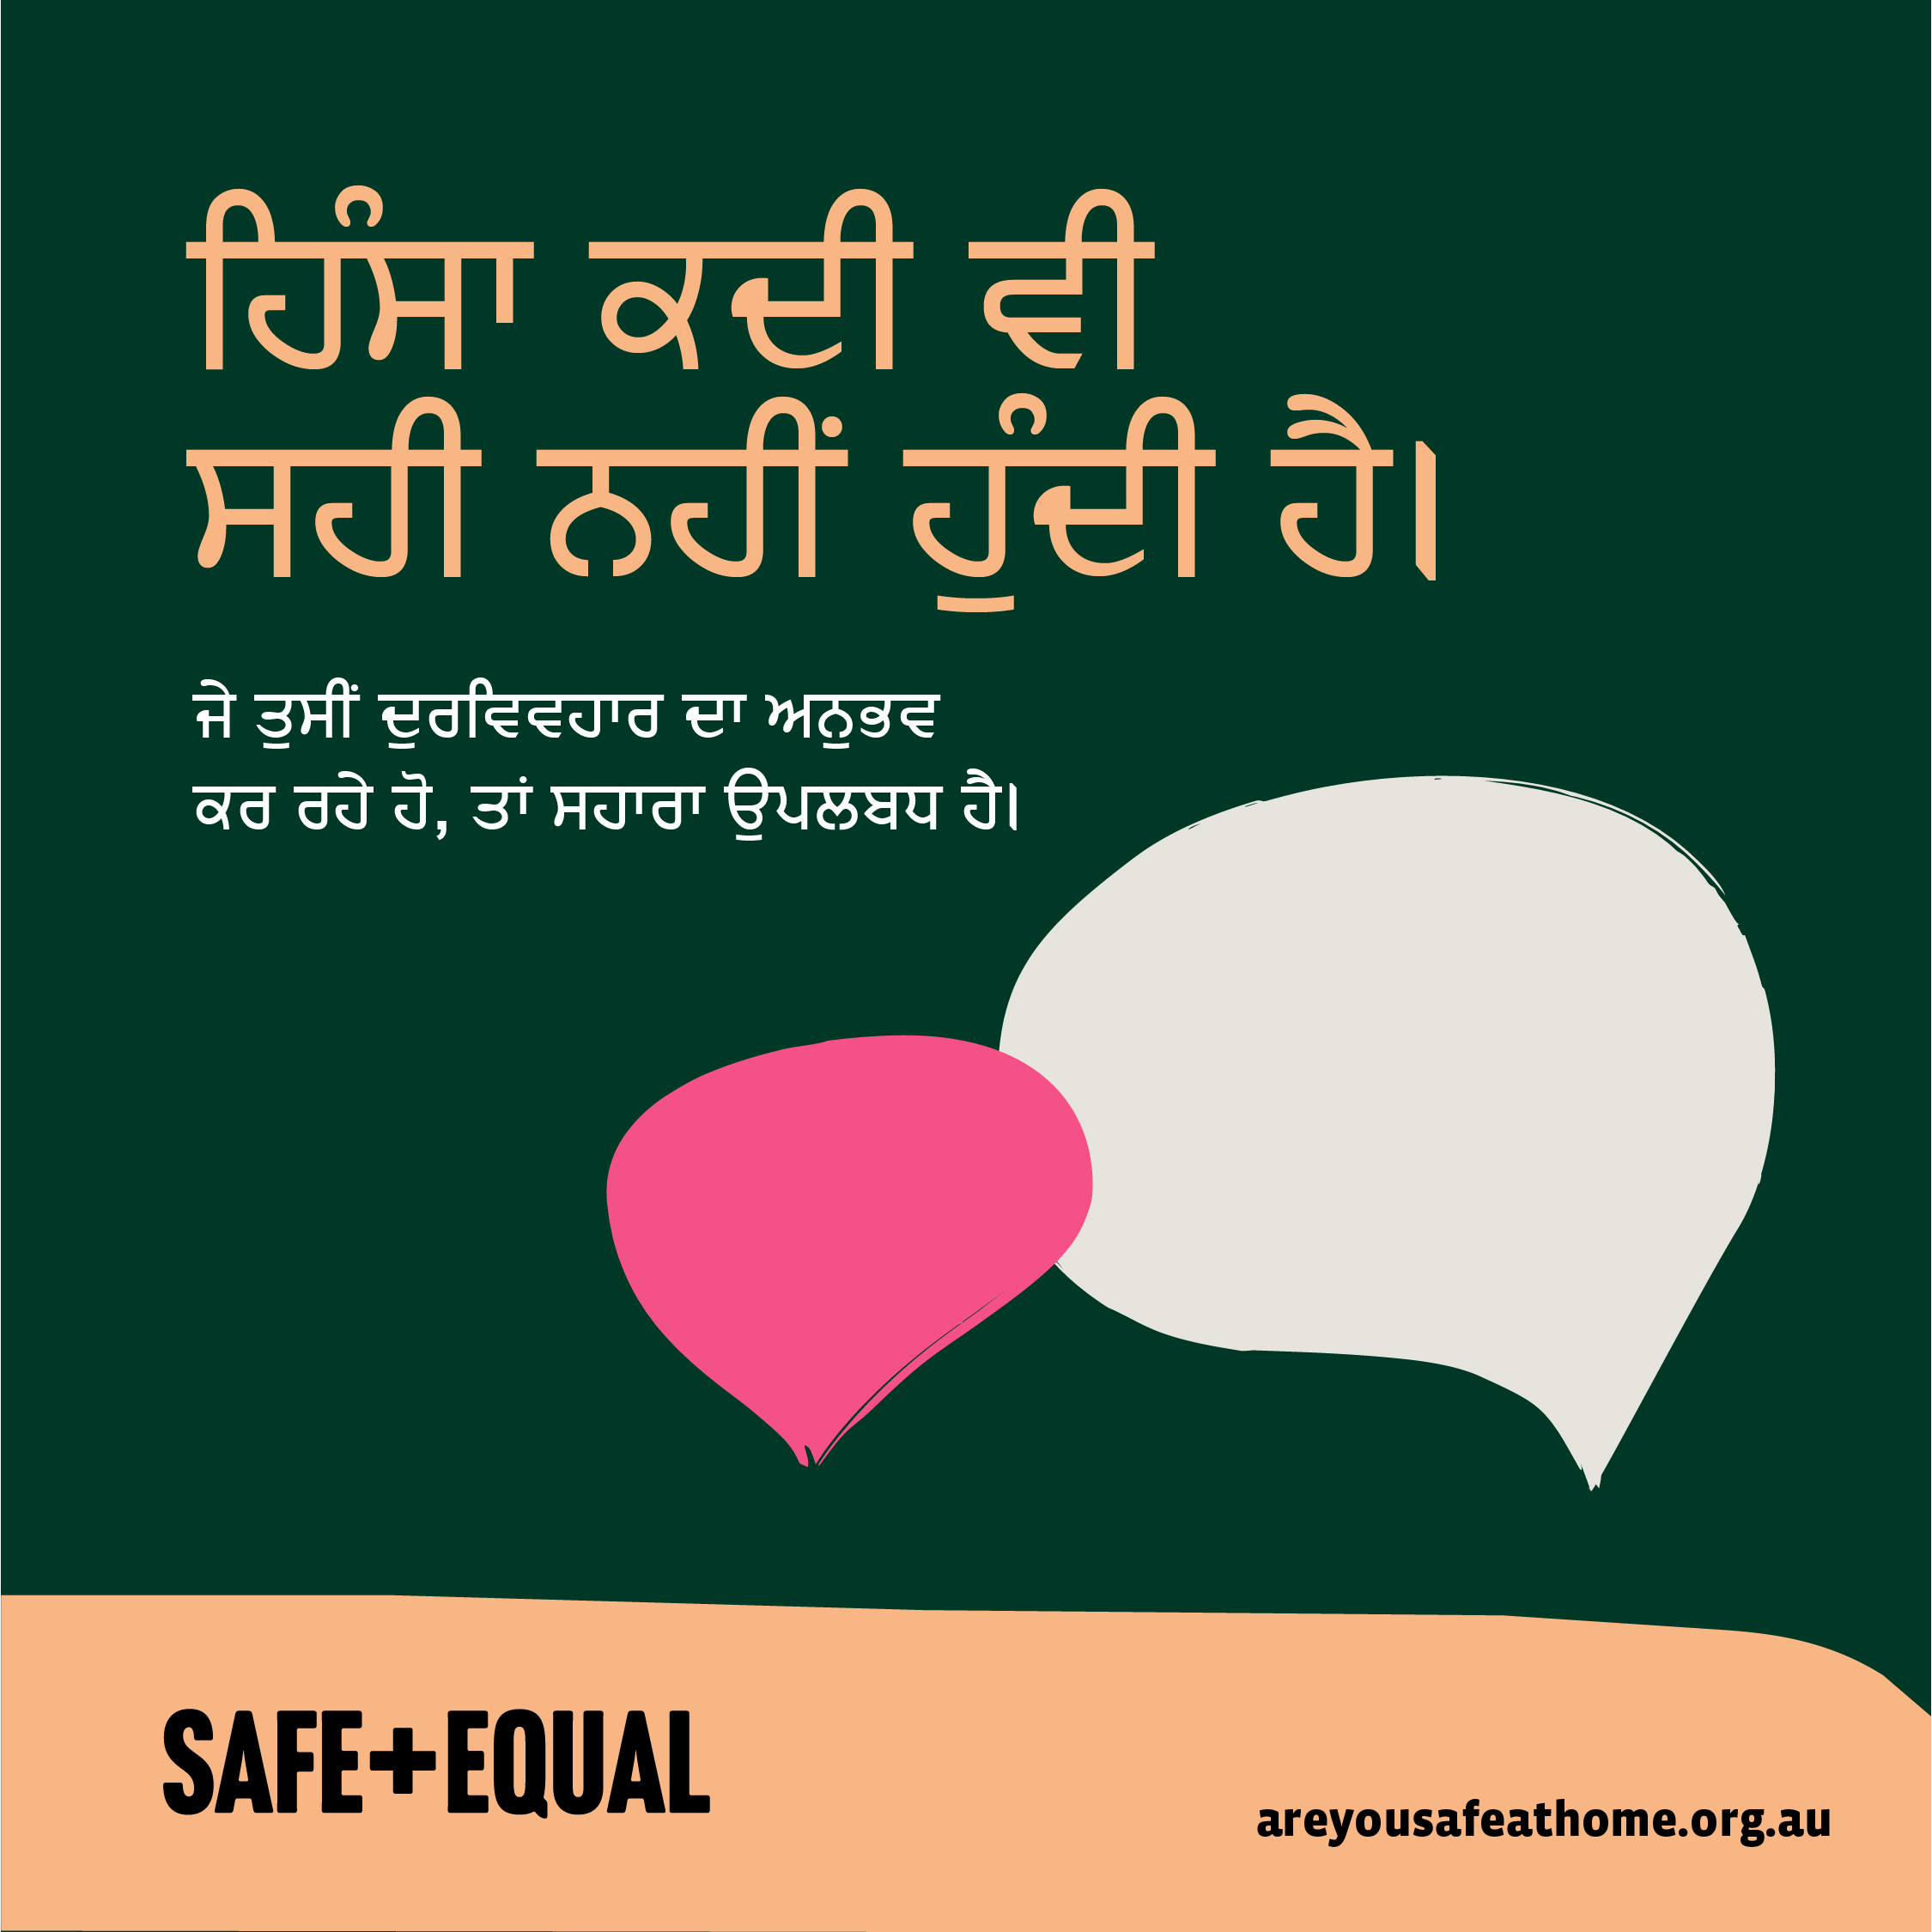 Social media tile for Are you safe at home translated into Punjabi